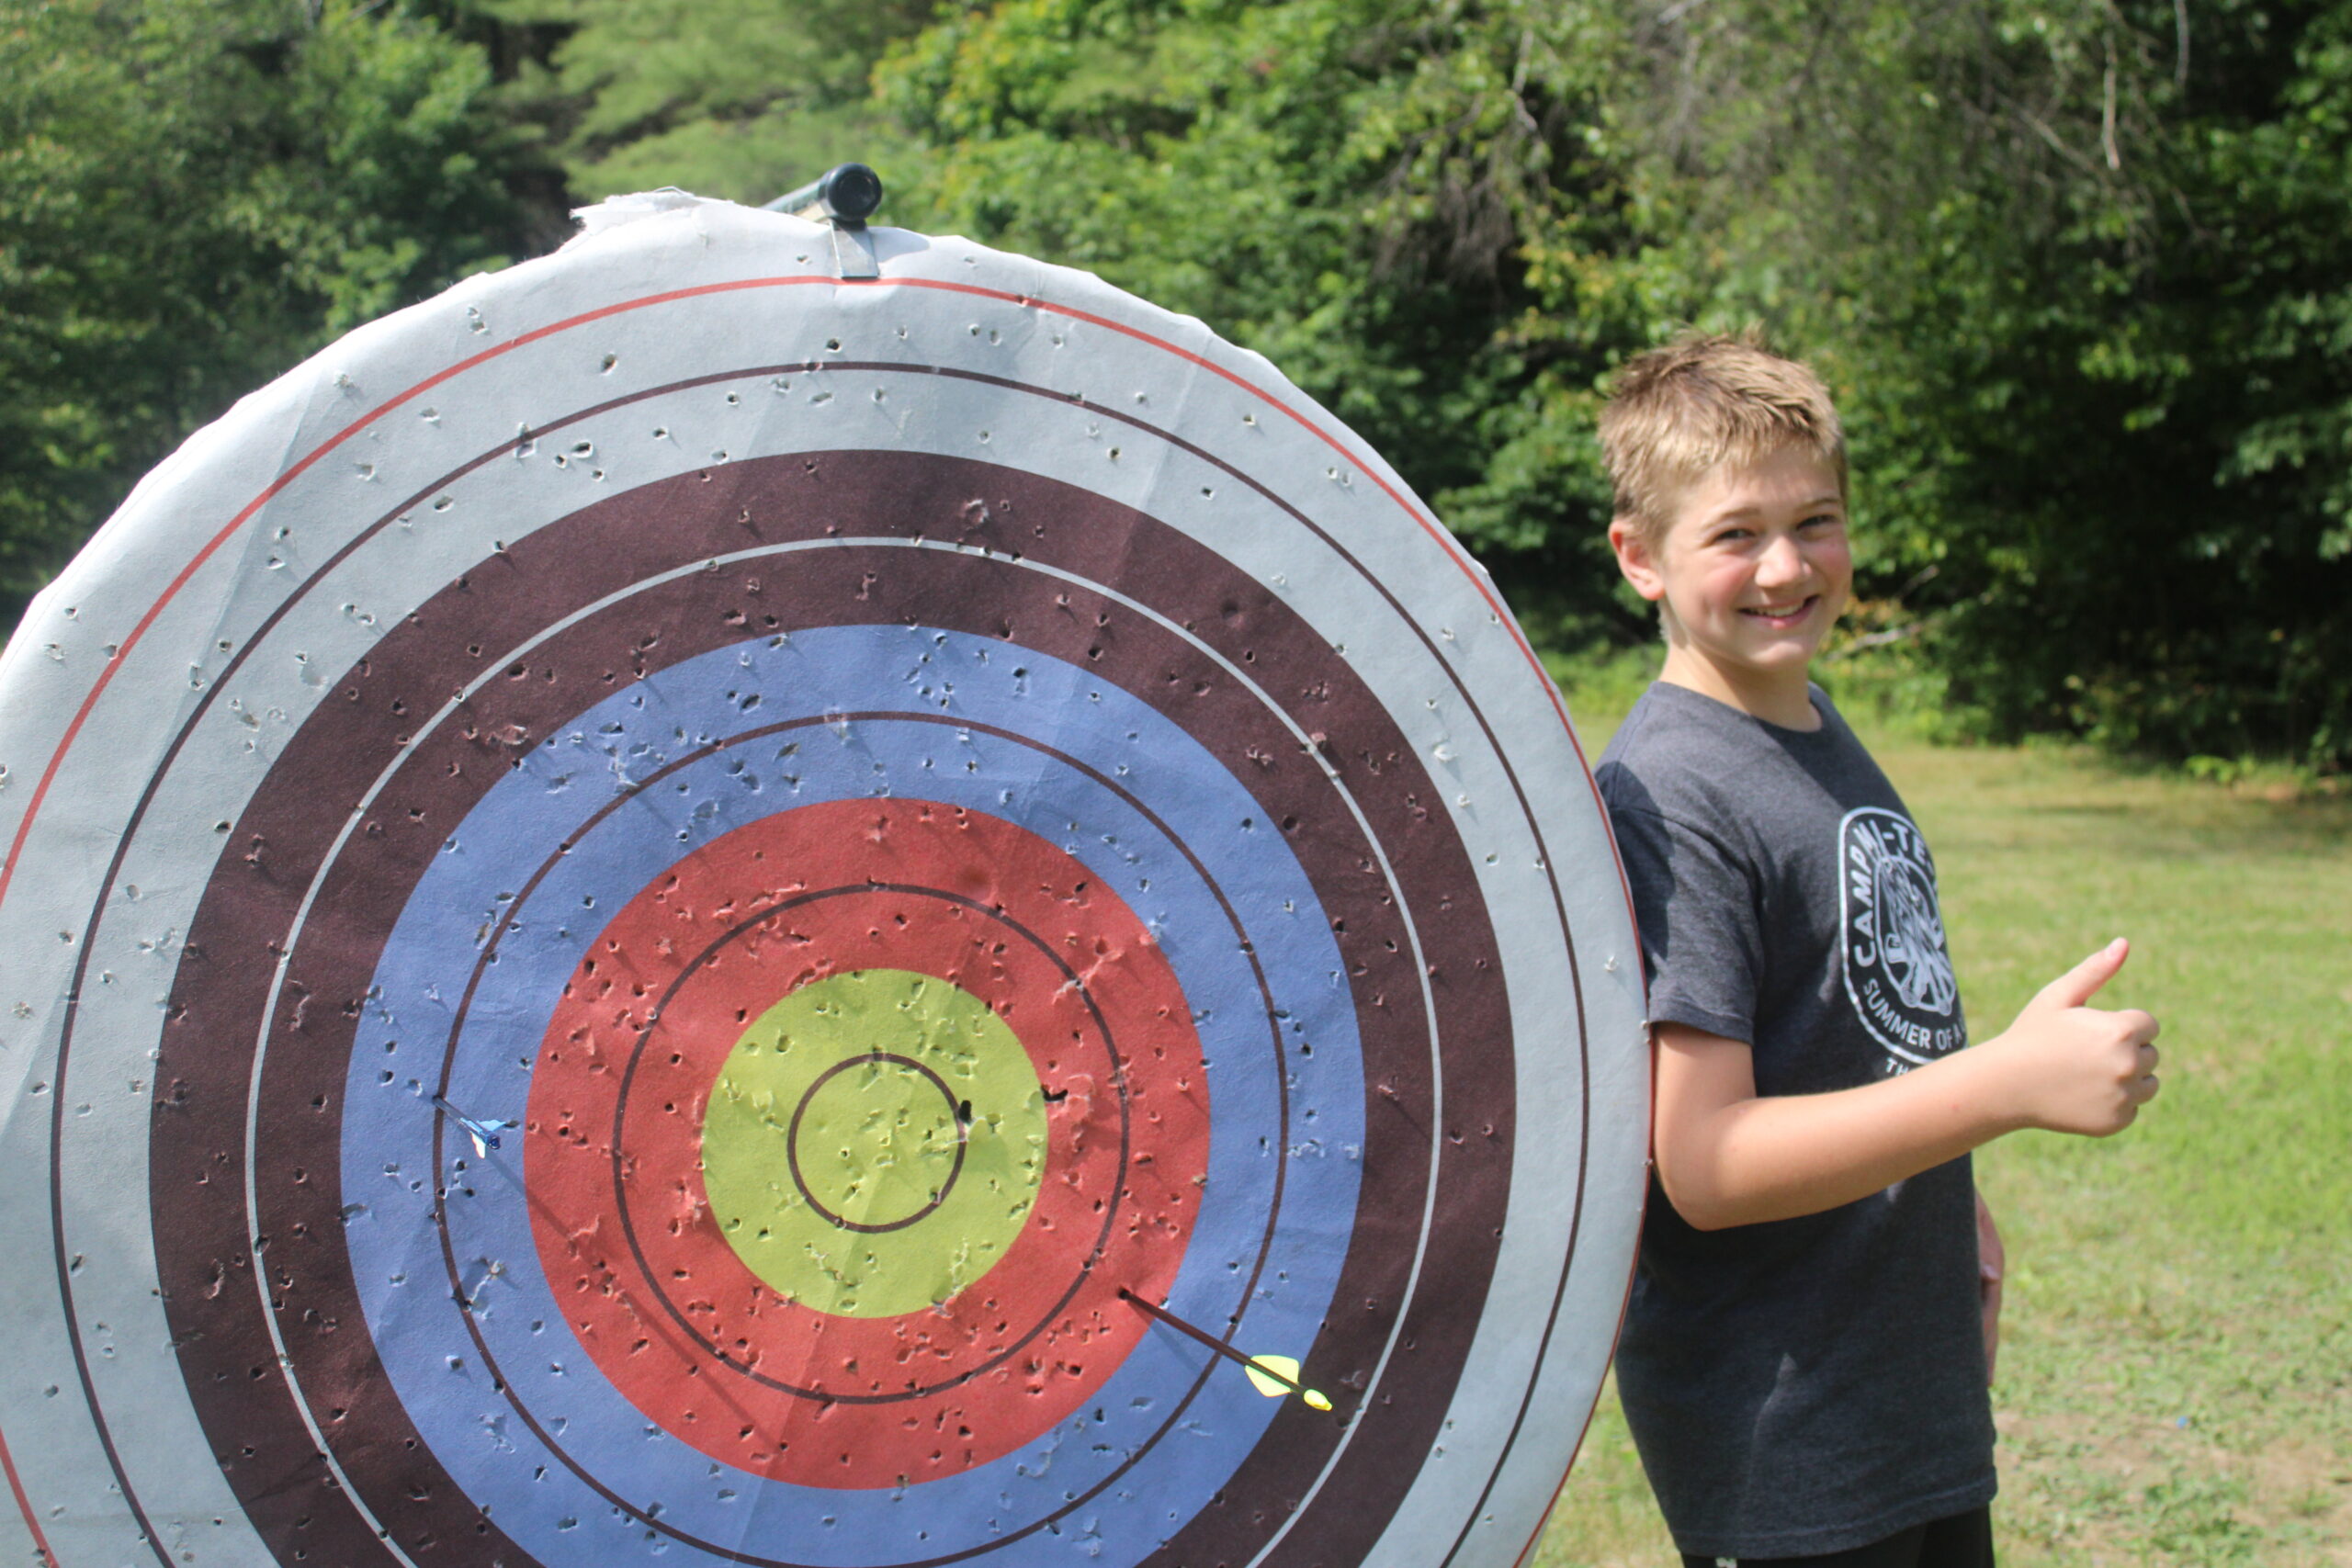 Archery at Camp Mi-Te-Na